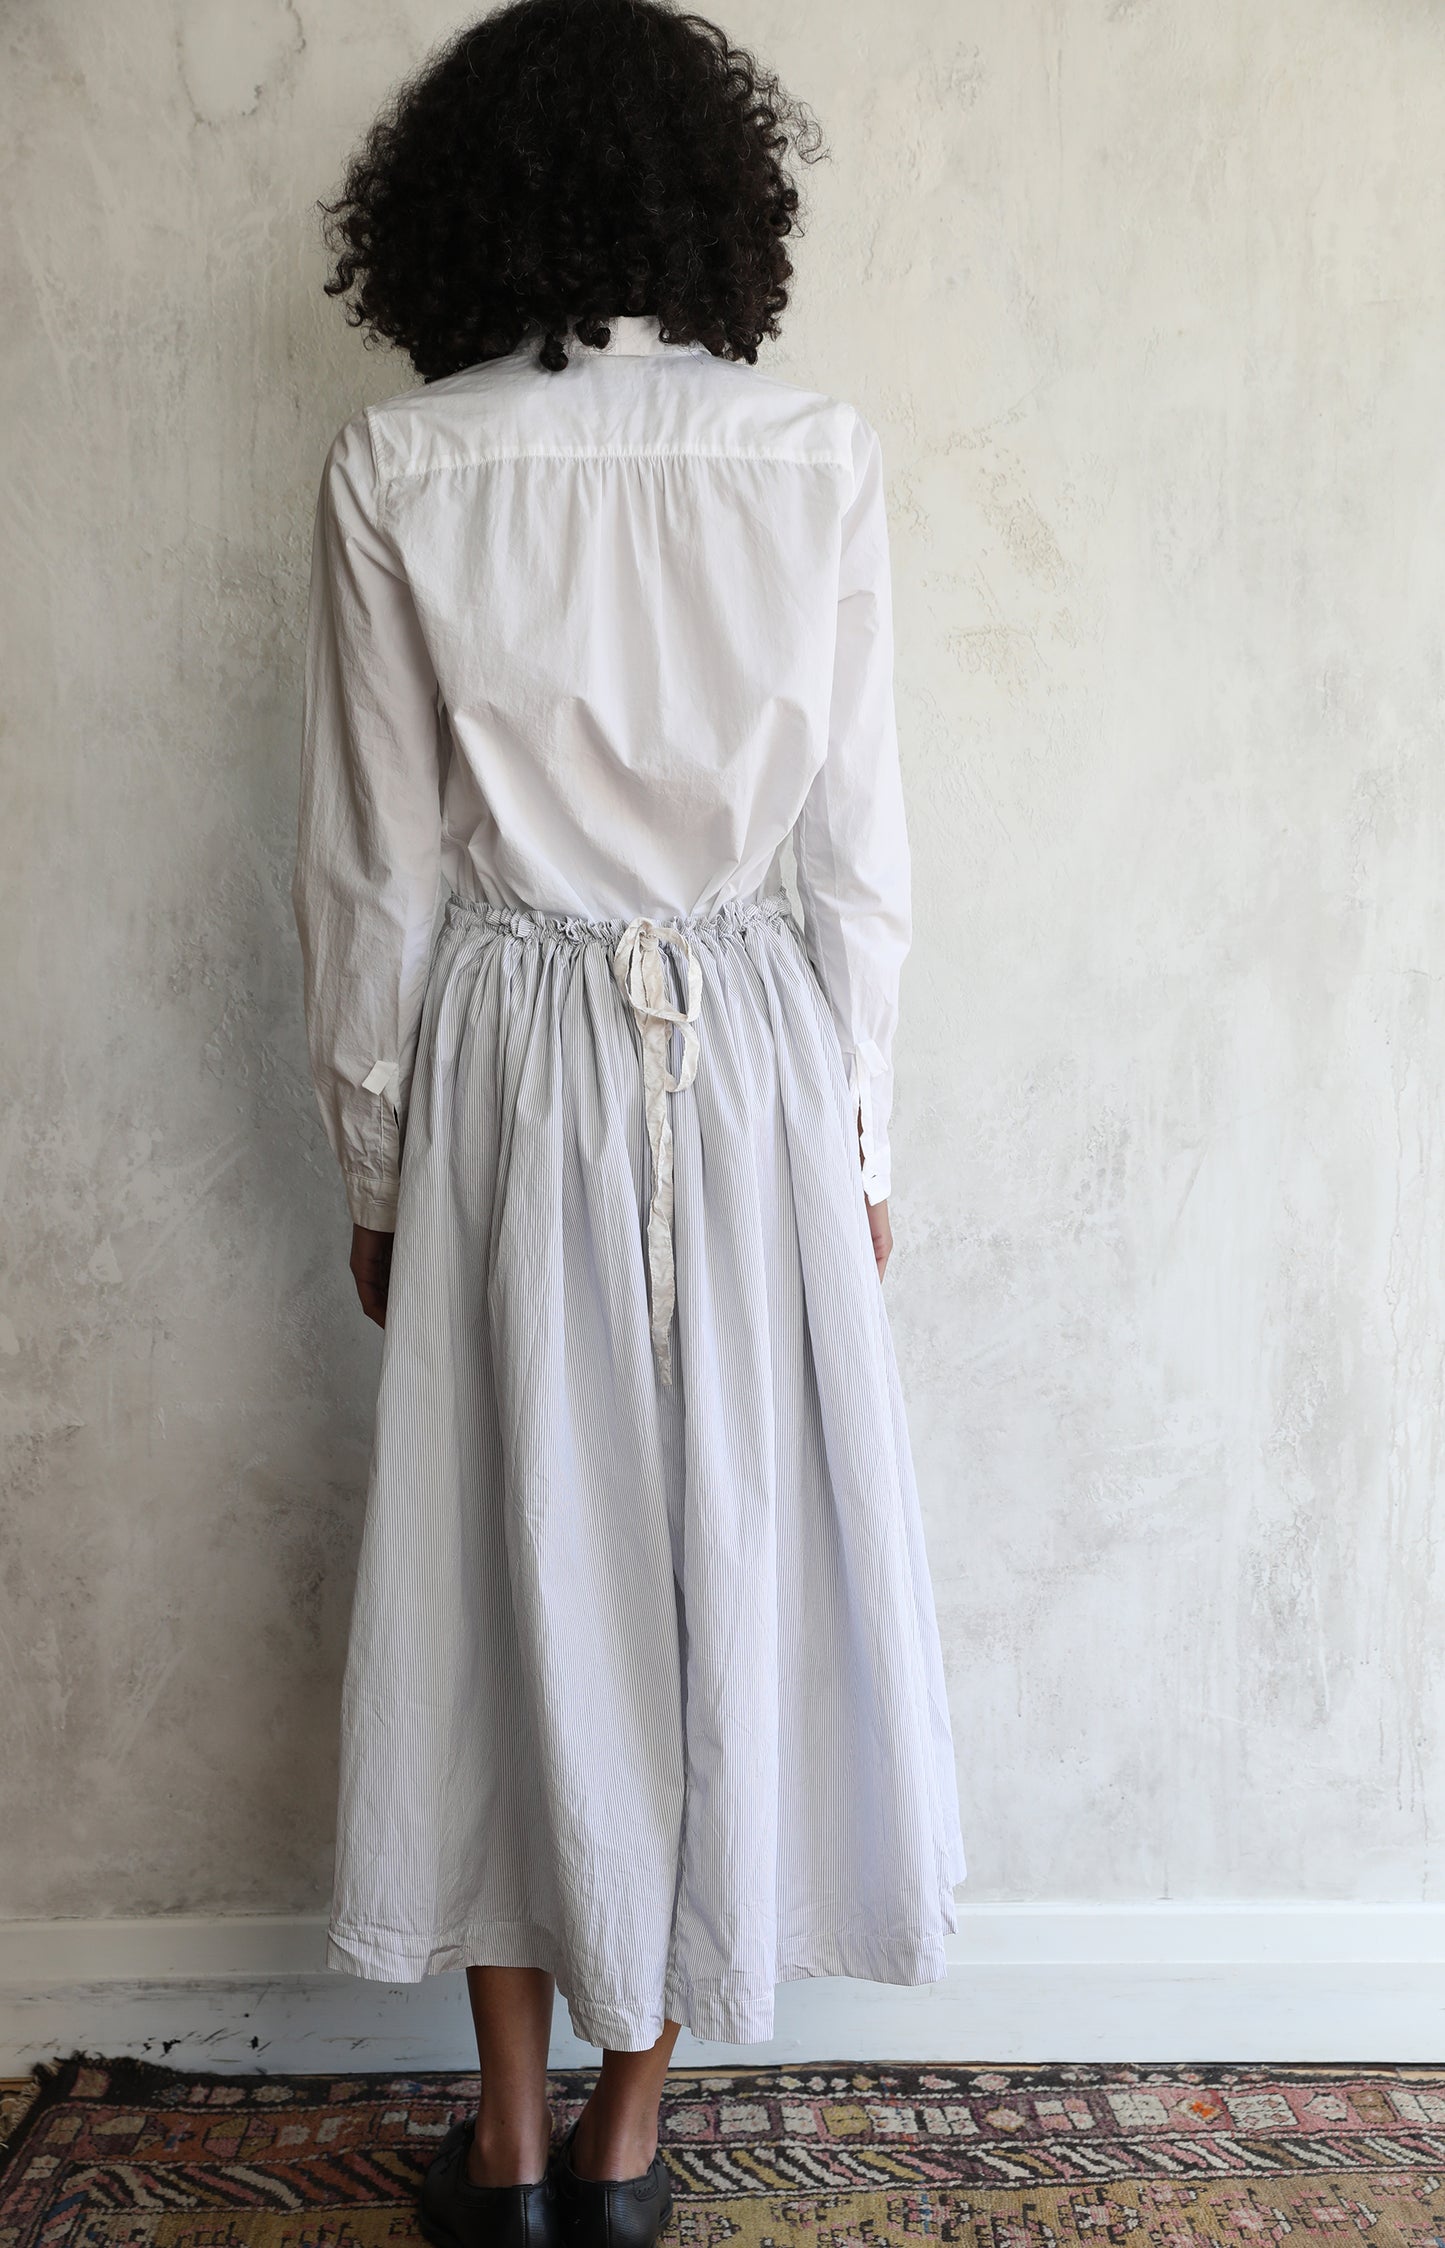 Ministripe Cotton Jeany Skirt